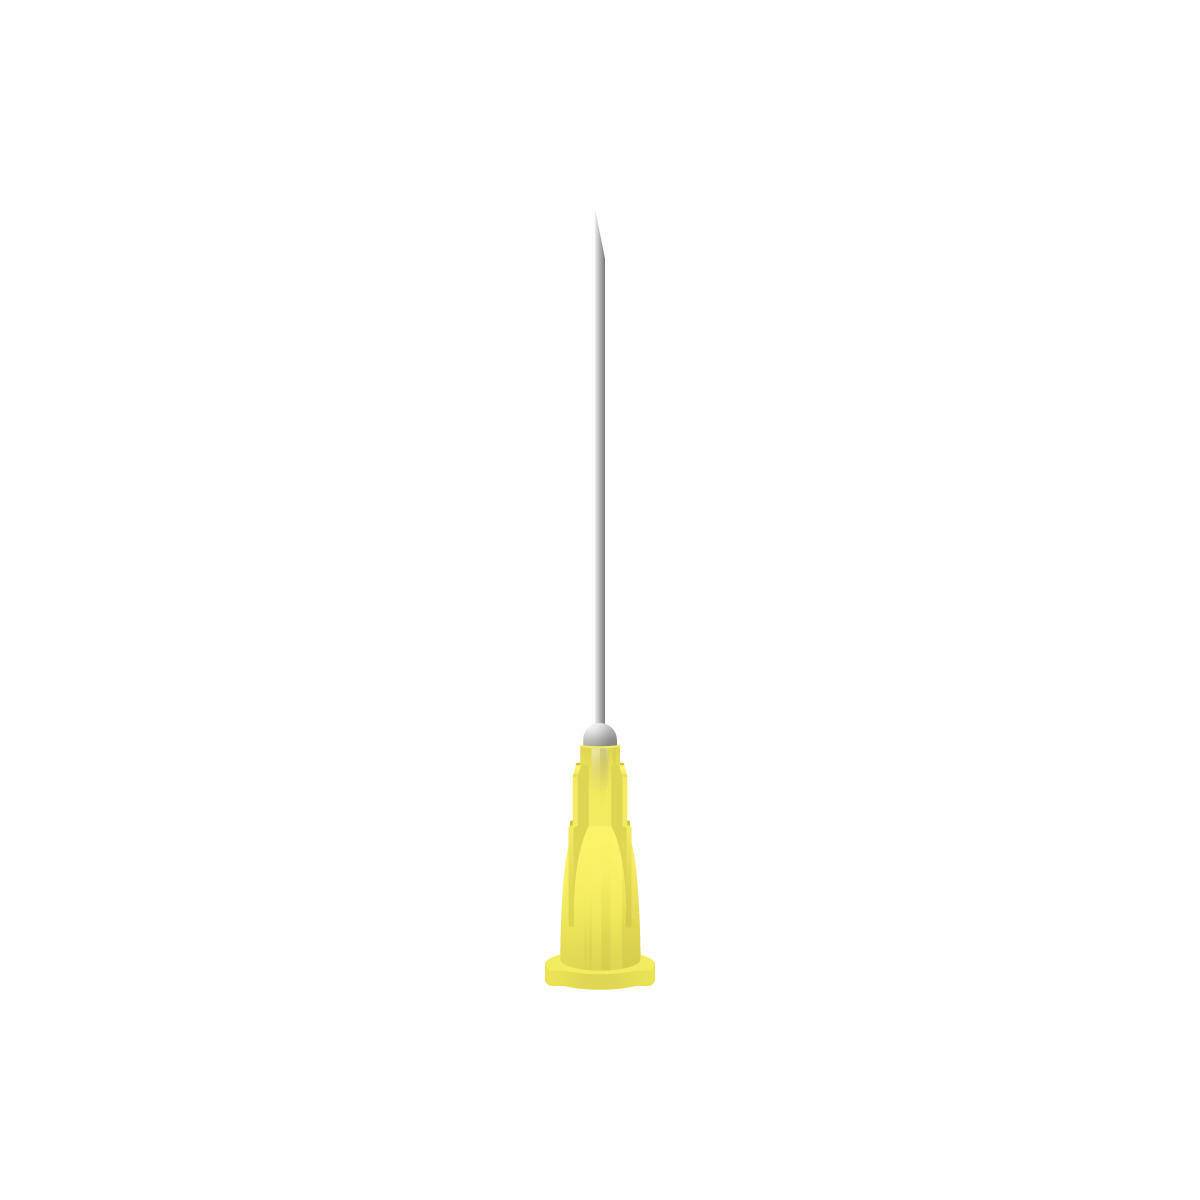 20g Yellow 1 inch BD Microlance Needles (25mm x 0.9mm) - UKMEDI